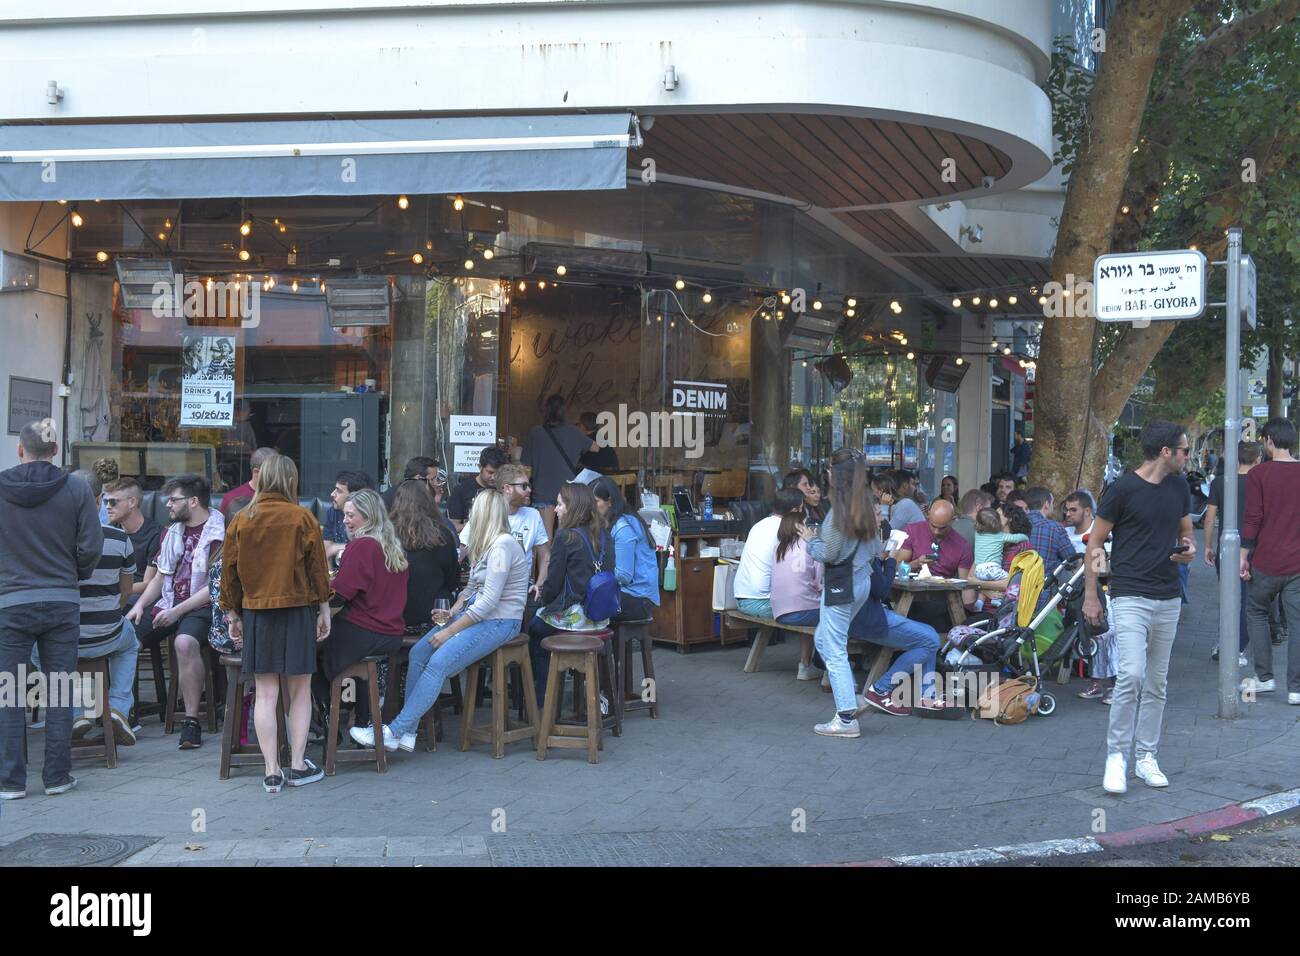 Restaurant, King George Street, Ecke Bar Giyora, Tel Aviv, Israel Stock Photo